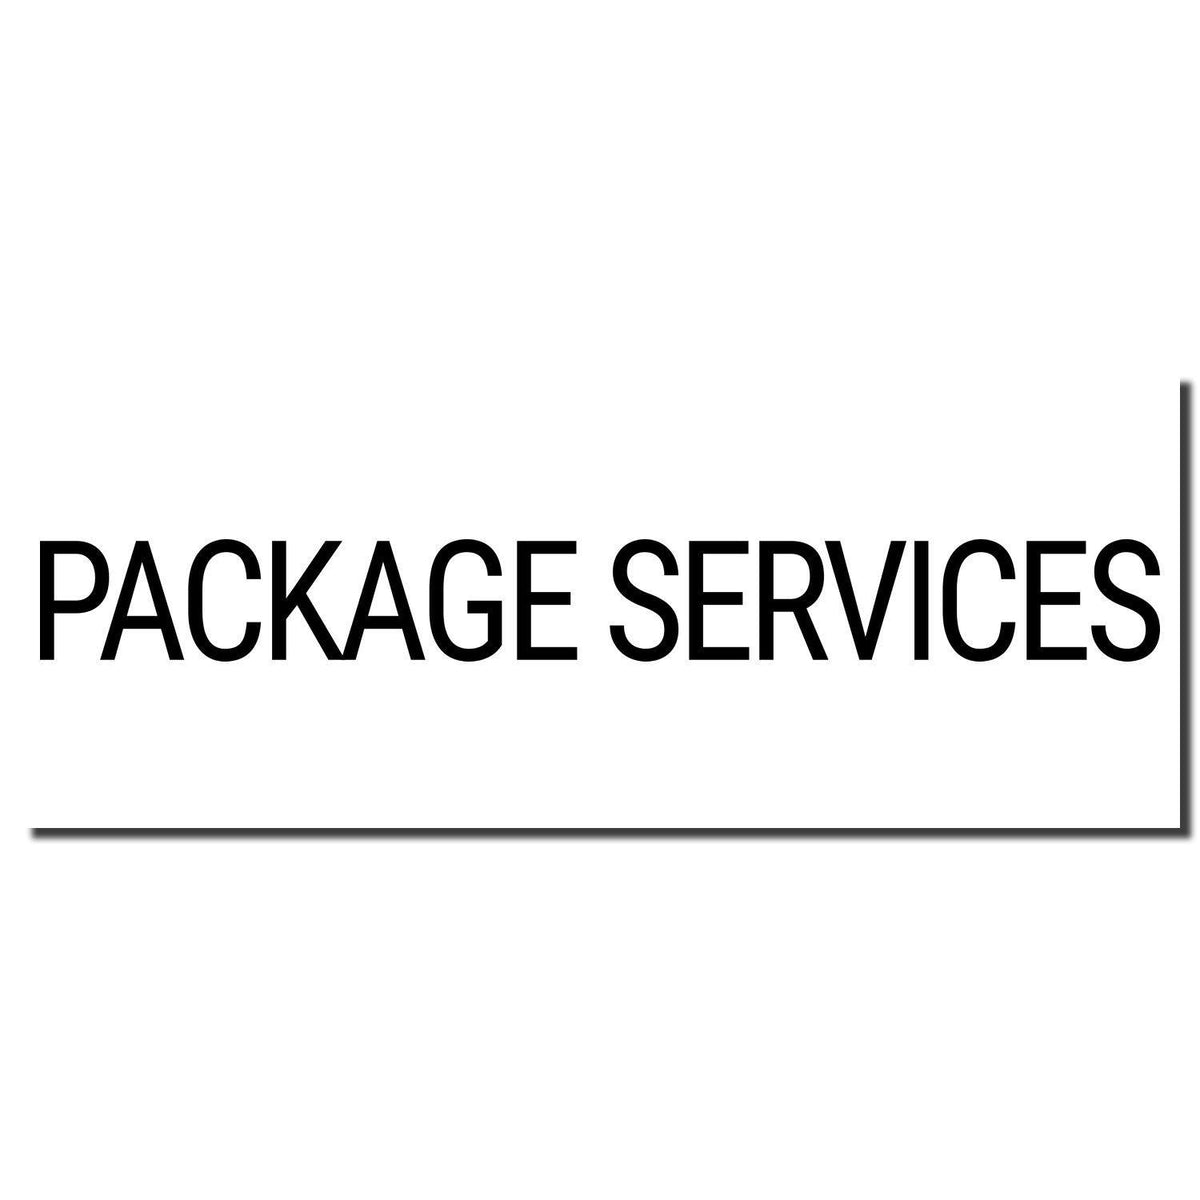 Enlarged Imprint Slim Pre-Inked Package Services Stamp Sample